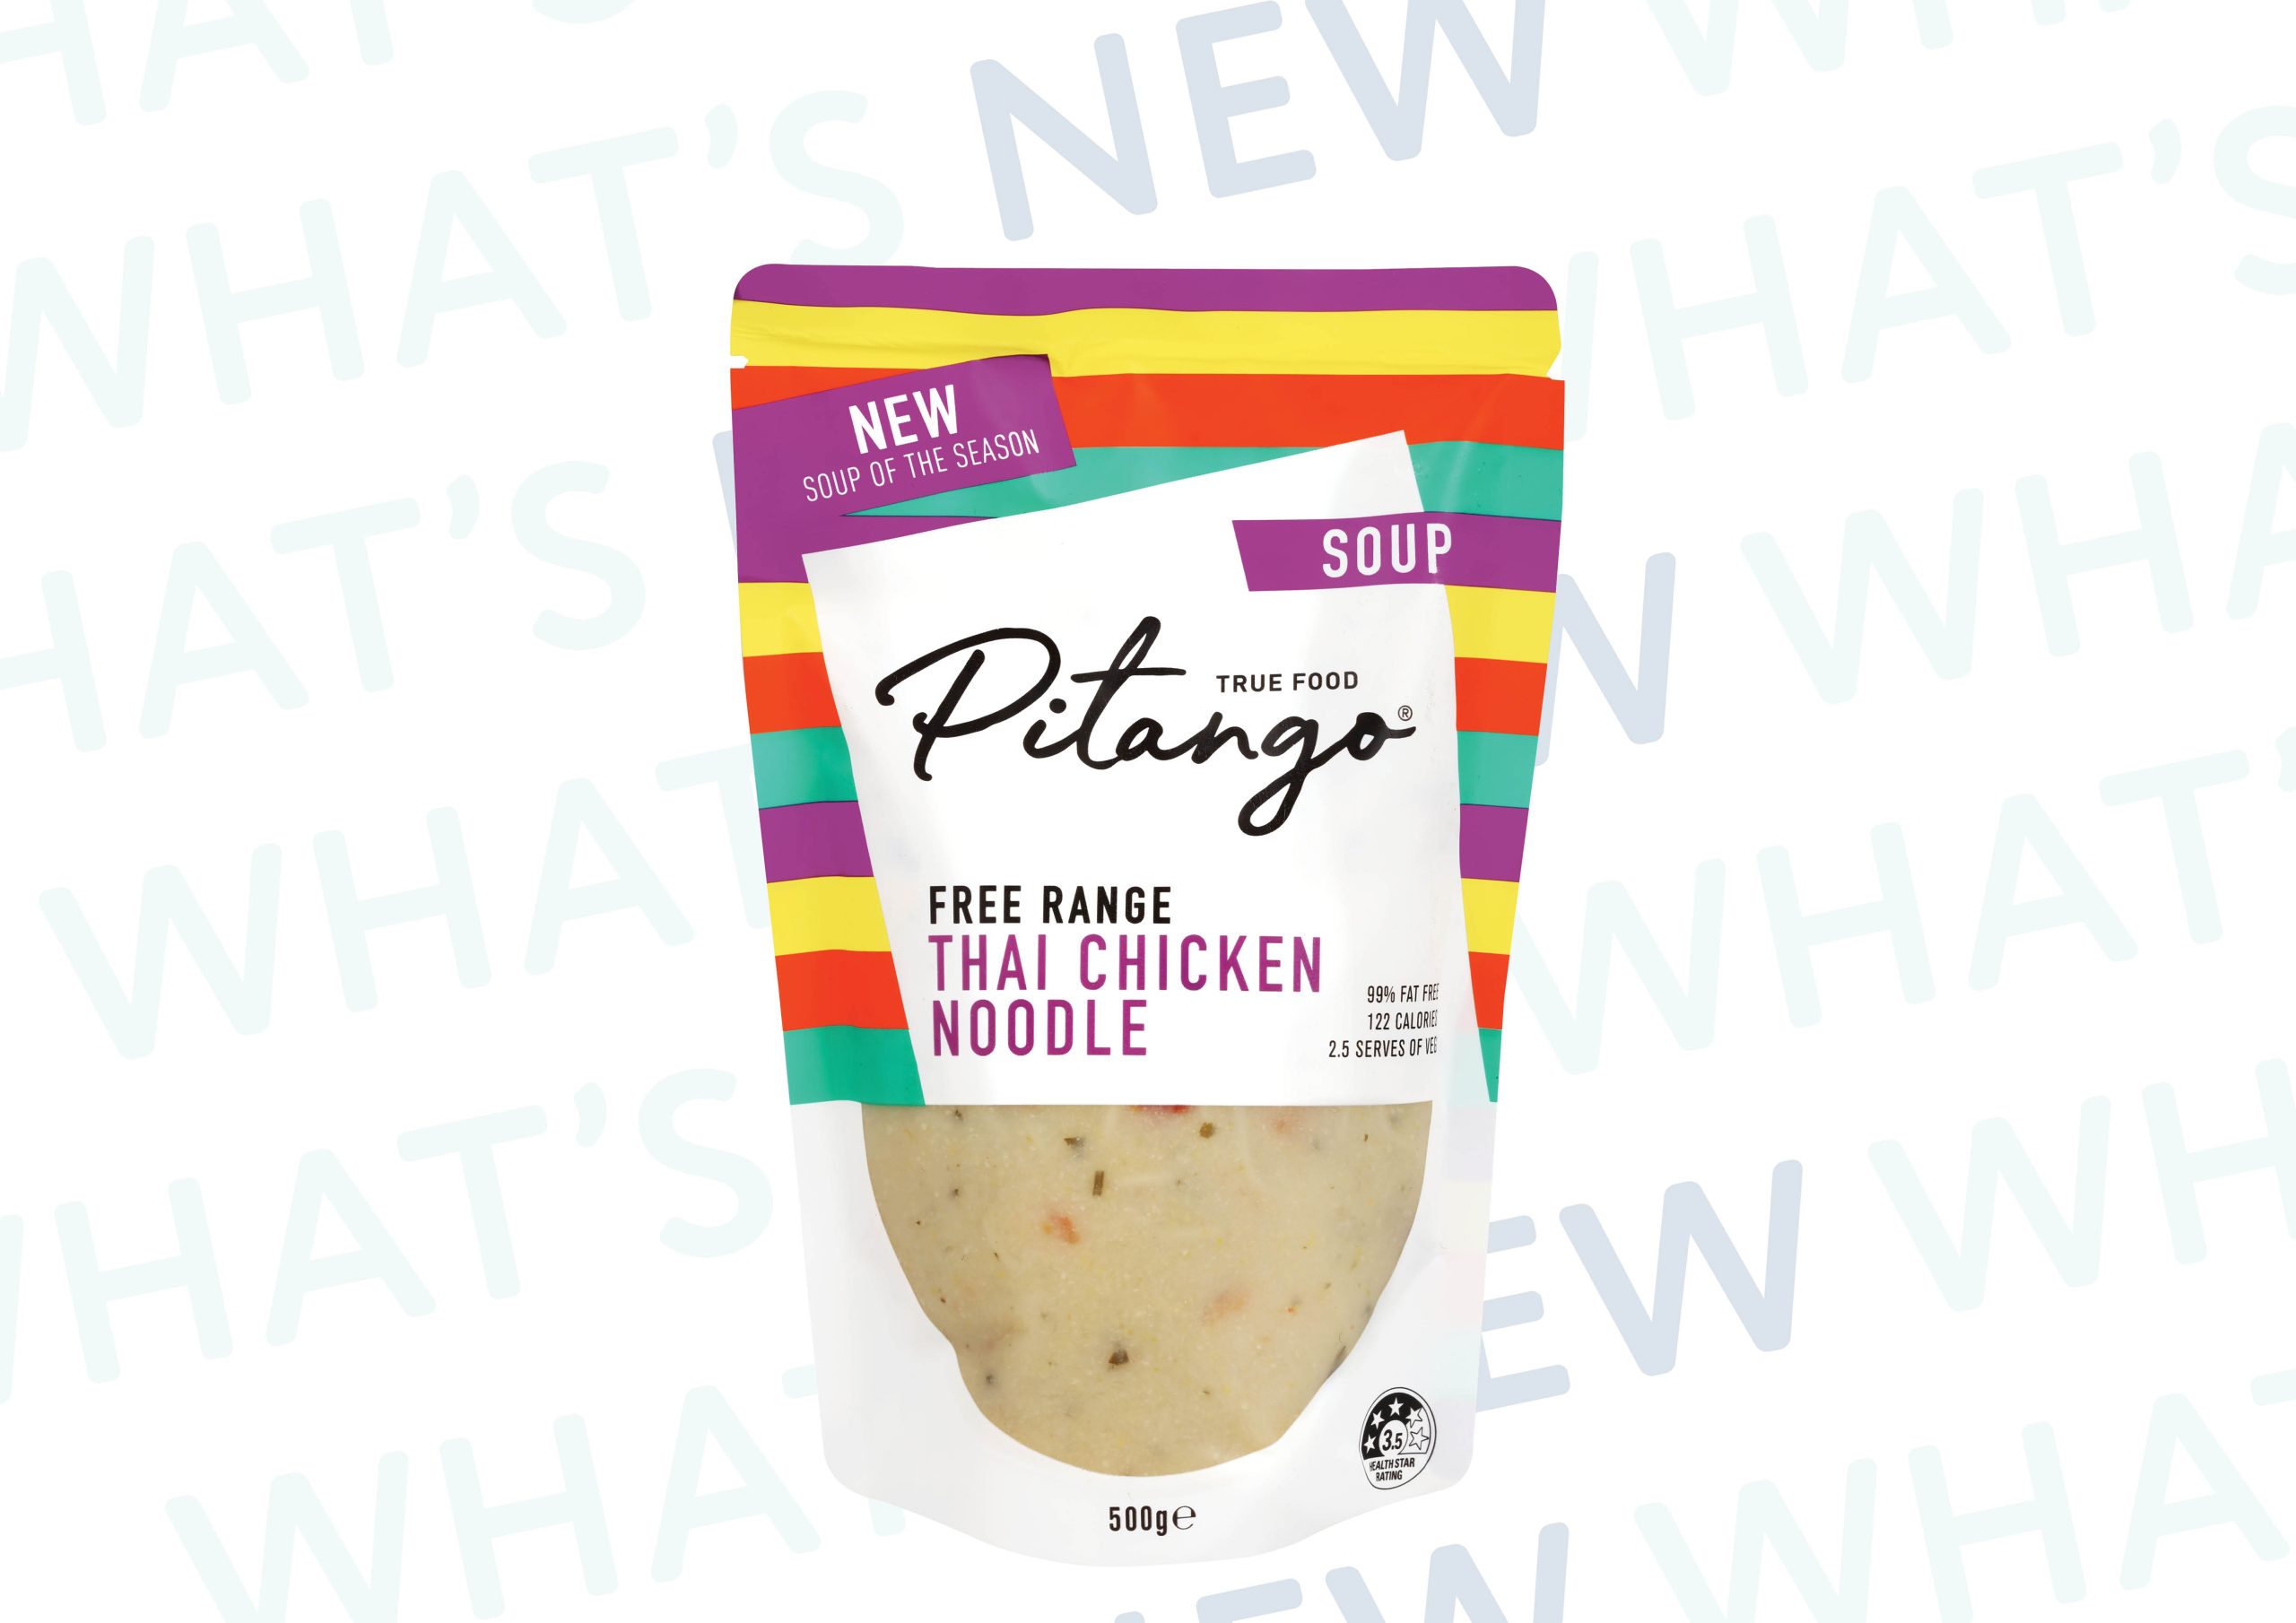 Pitango's New Thai Chicken Noodle Soup